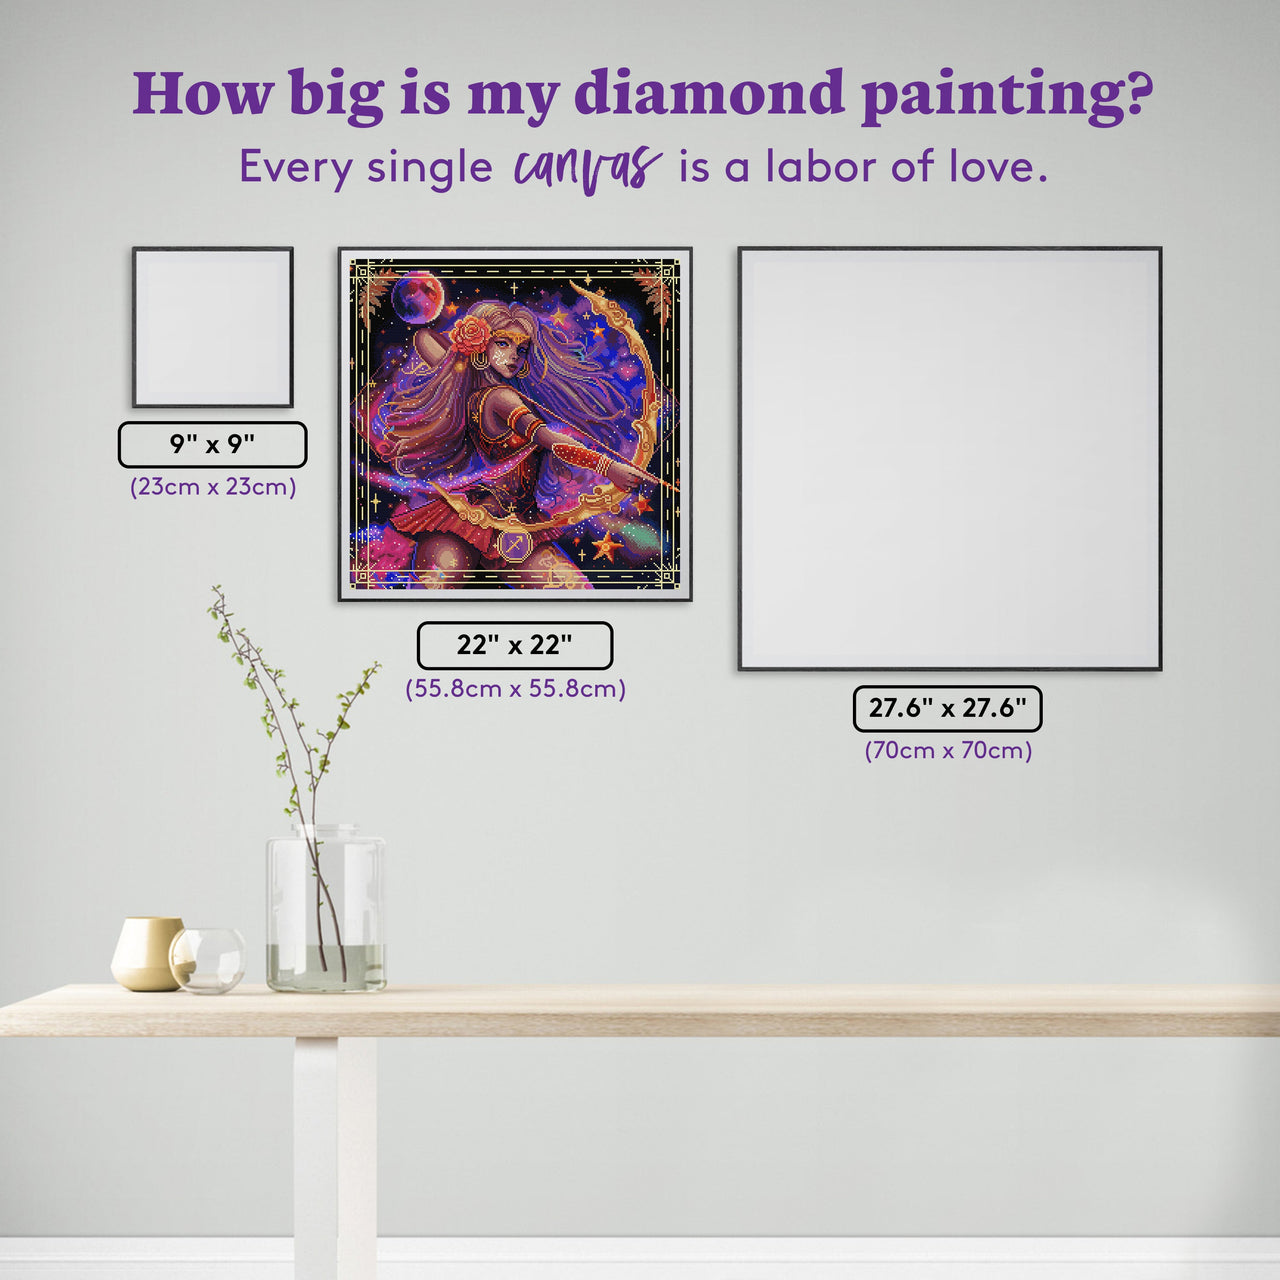 Diamond Painting Sagittarius 22" x 22" (55.8cm x 55.8cm) / Square with 58 Colors including 3 ABs, 1 Electro Diamonds, 1 Iridescent Diamonds, and 4 Fairy Dust Diamonds / 50,176